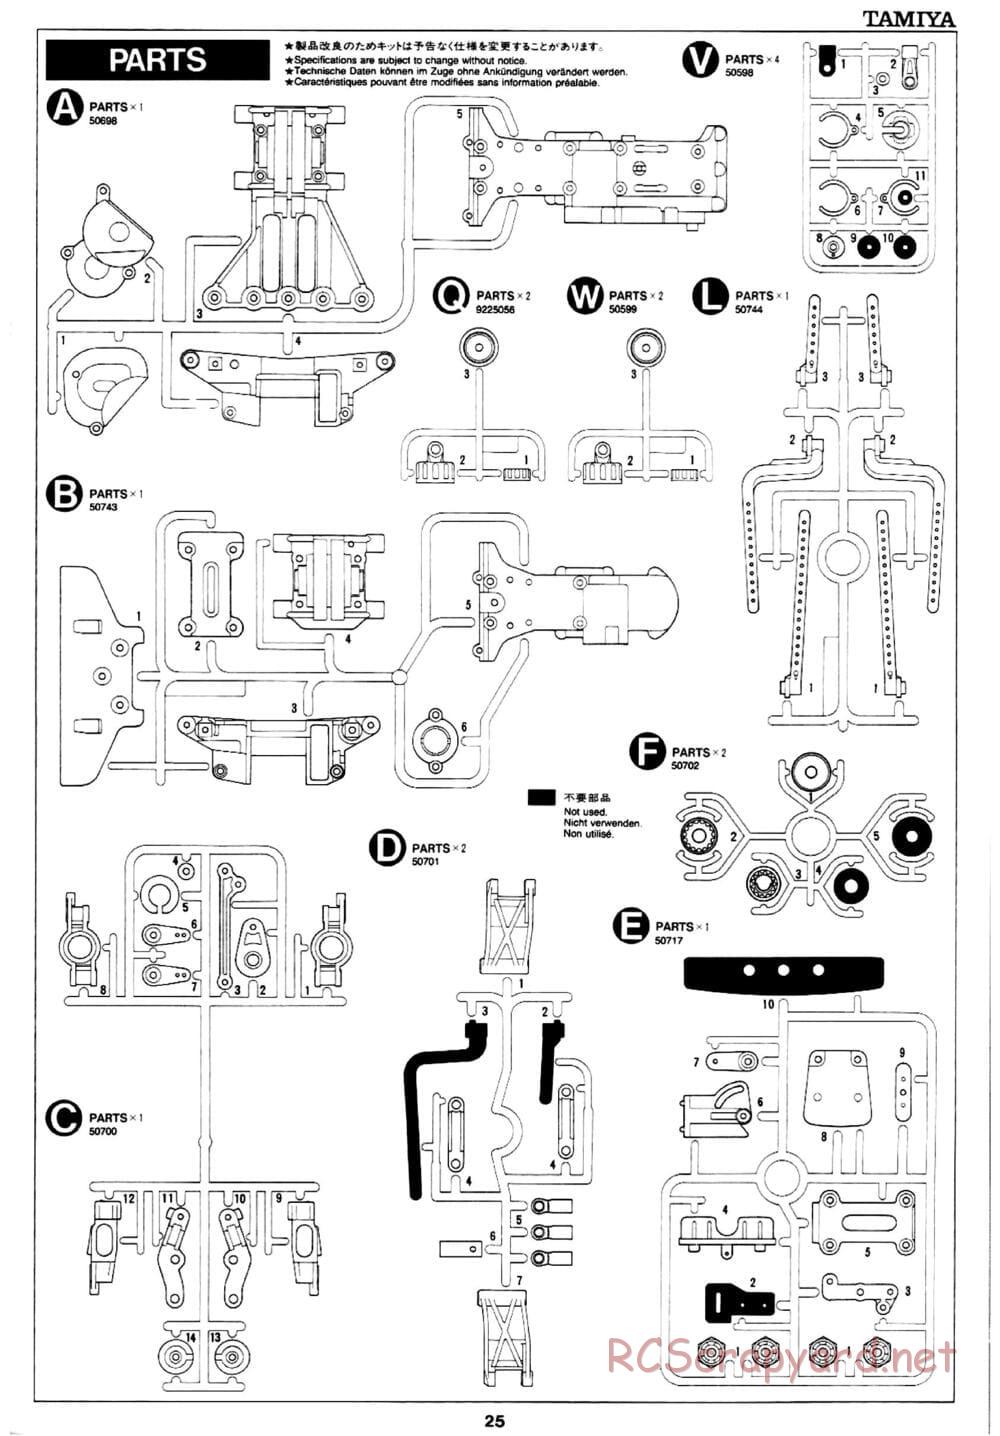 Tamiya - Mobil 1 NSX - TA-03R Chassis - Manual - Page 25